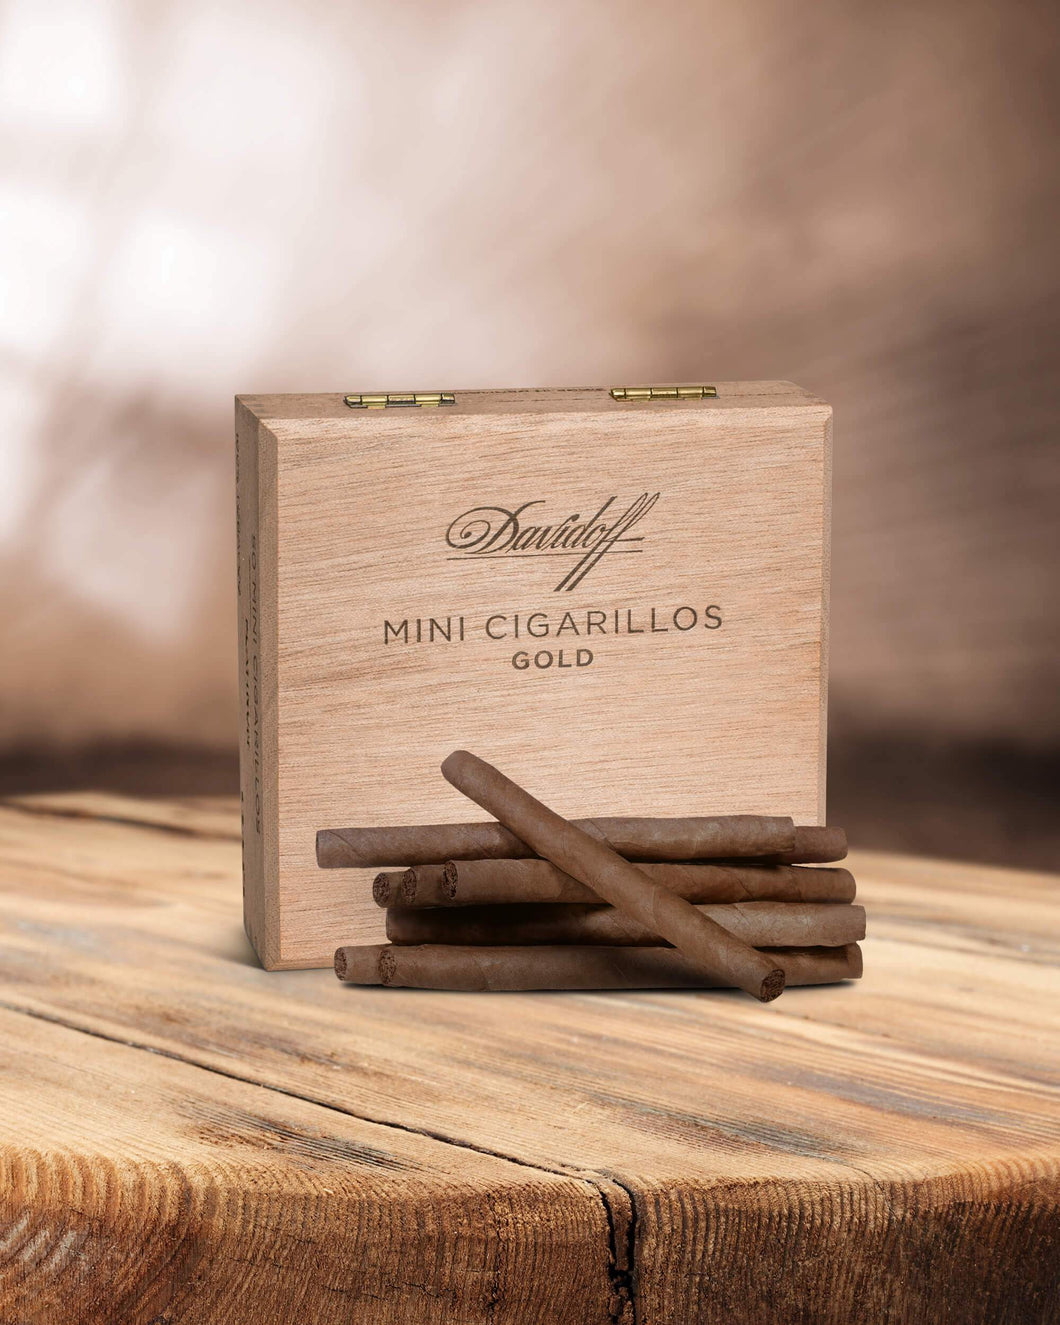 Davidoff Mini Cigarillos GOLD